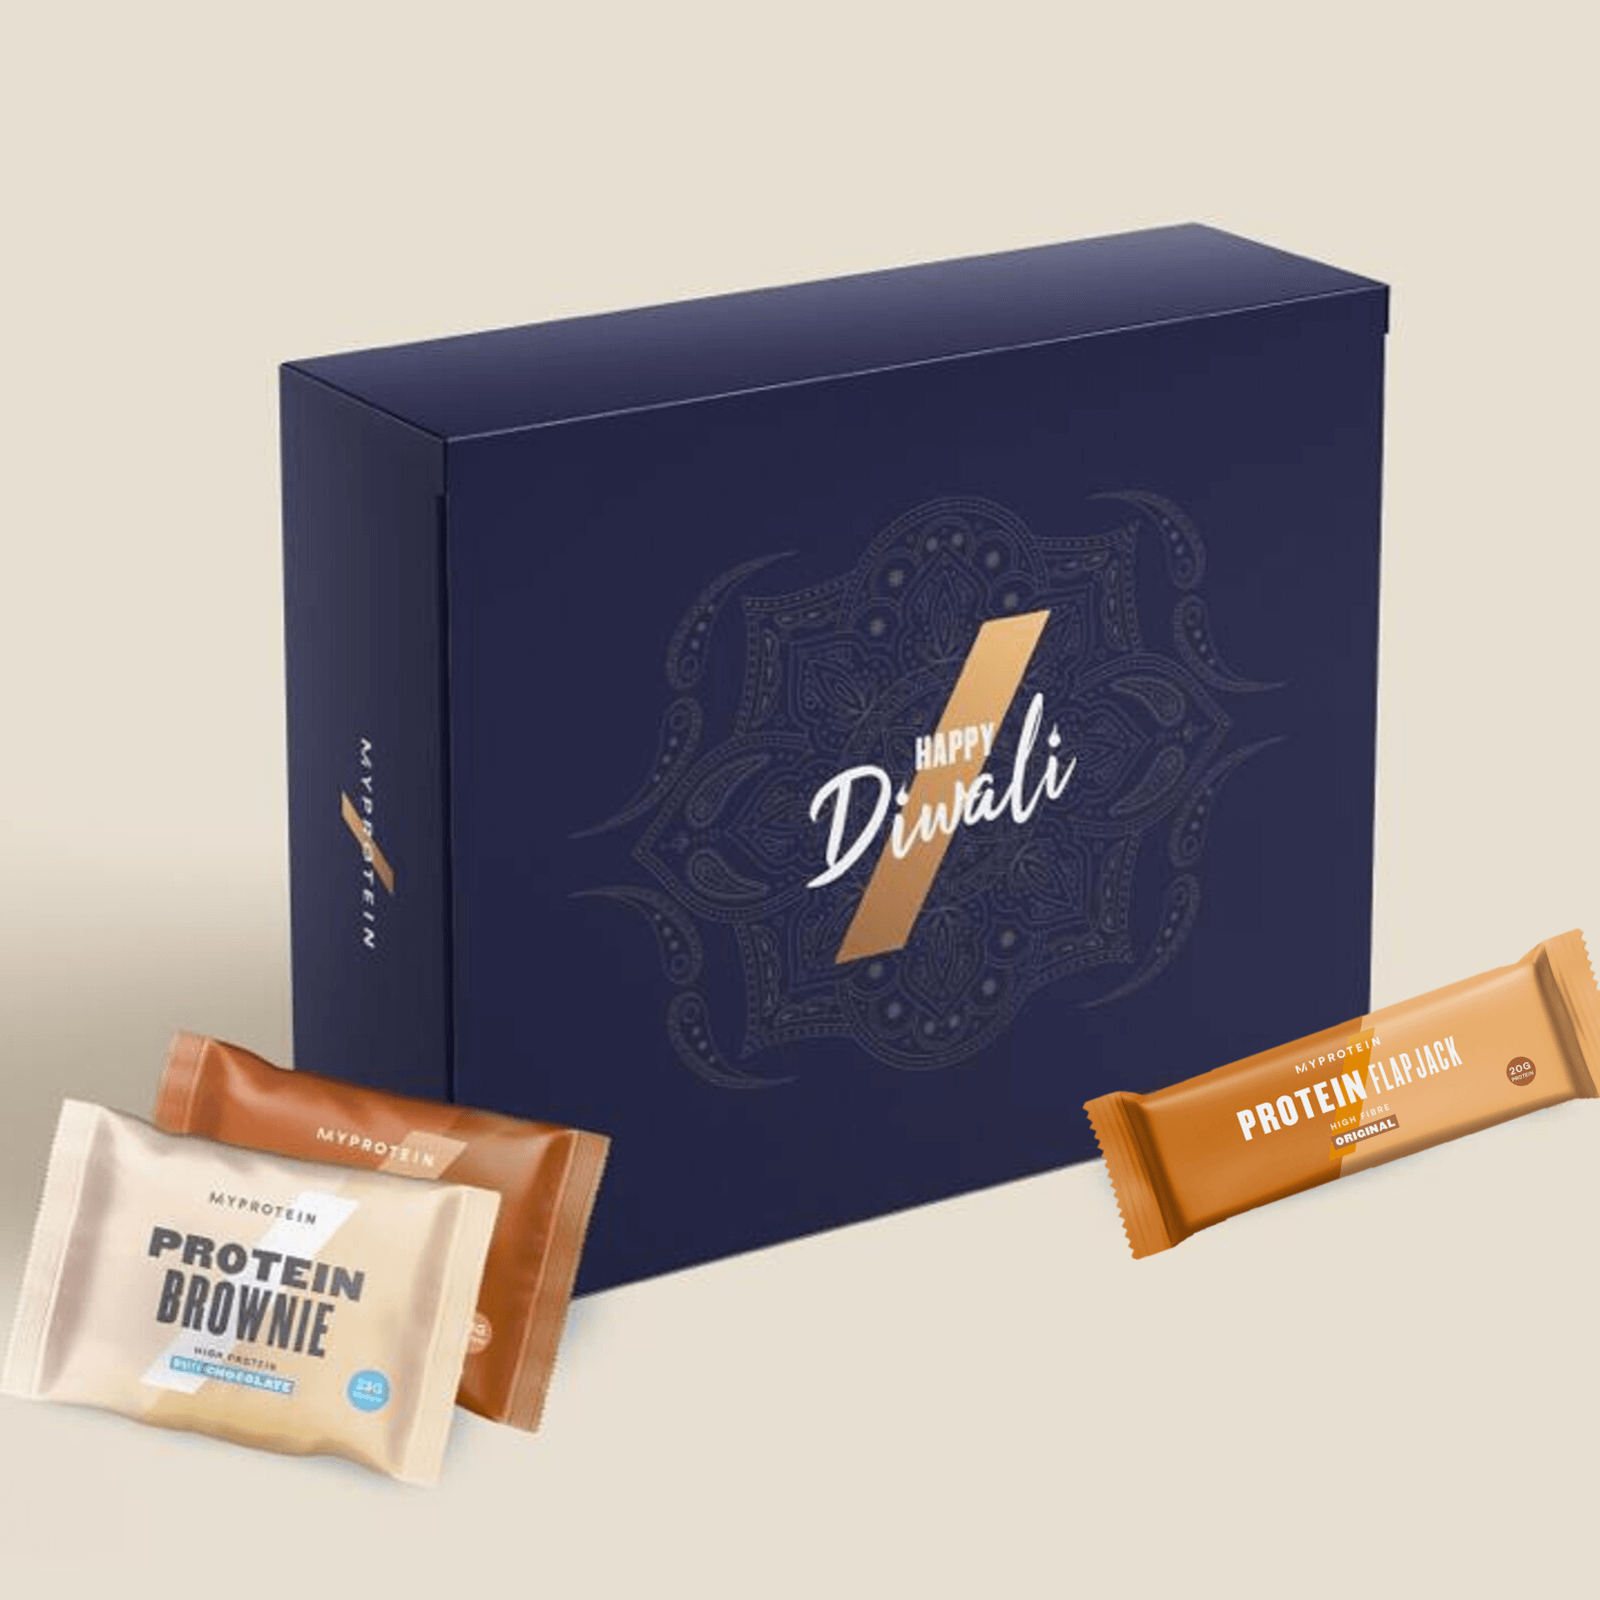 About Diwali Gift Box